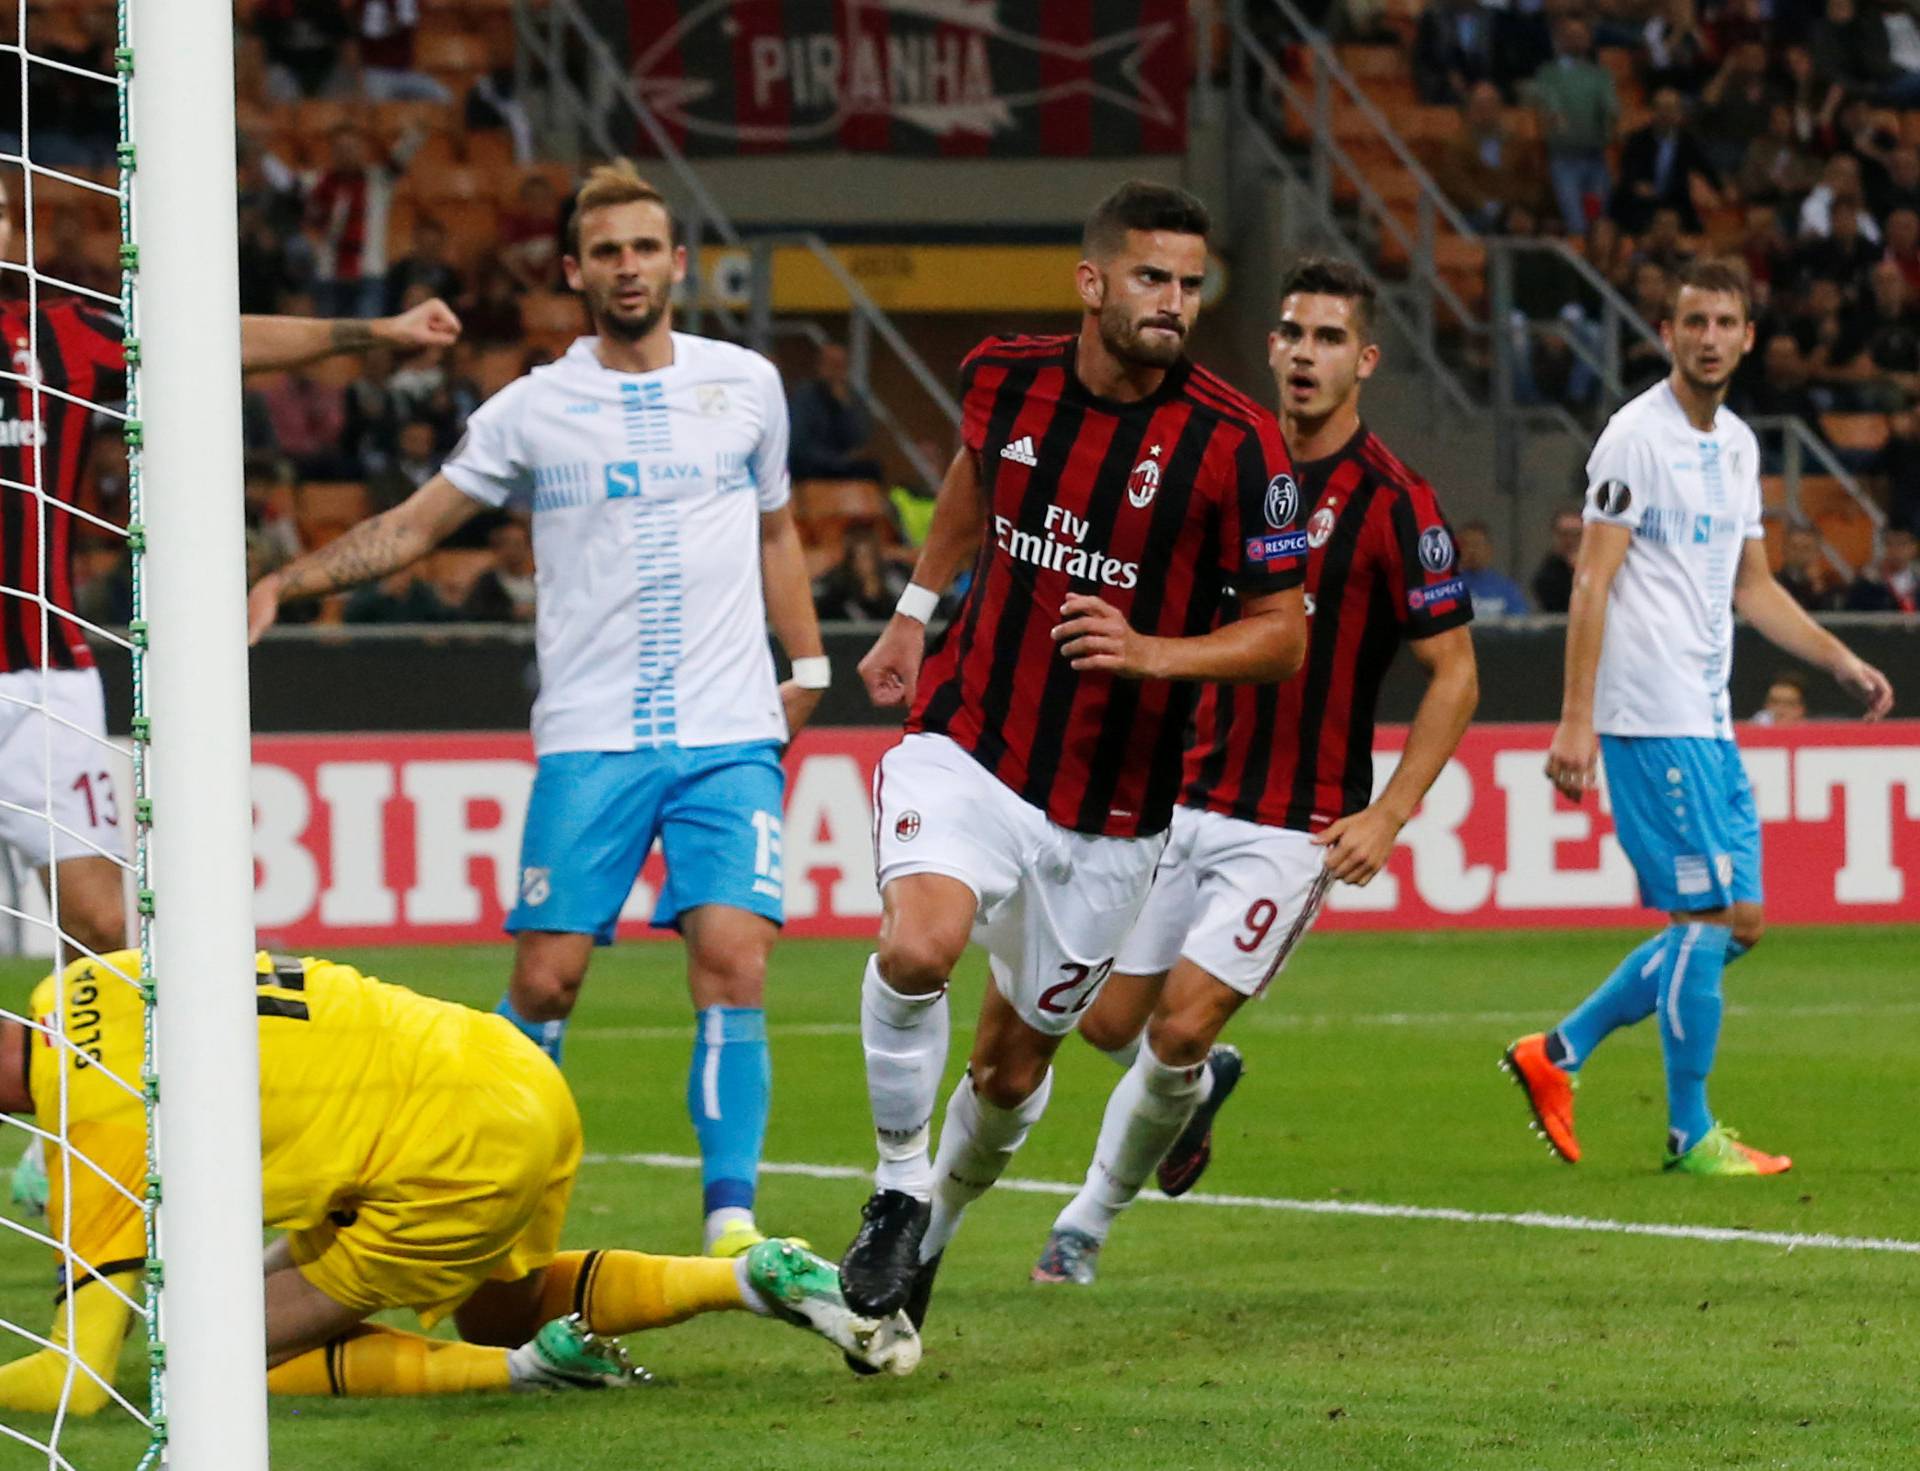 Europa League - AC Milan vs Rijeka